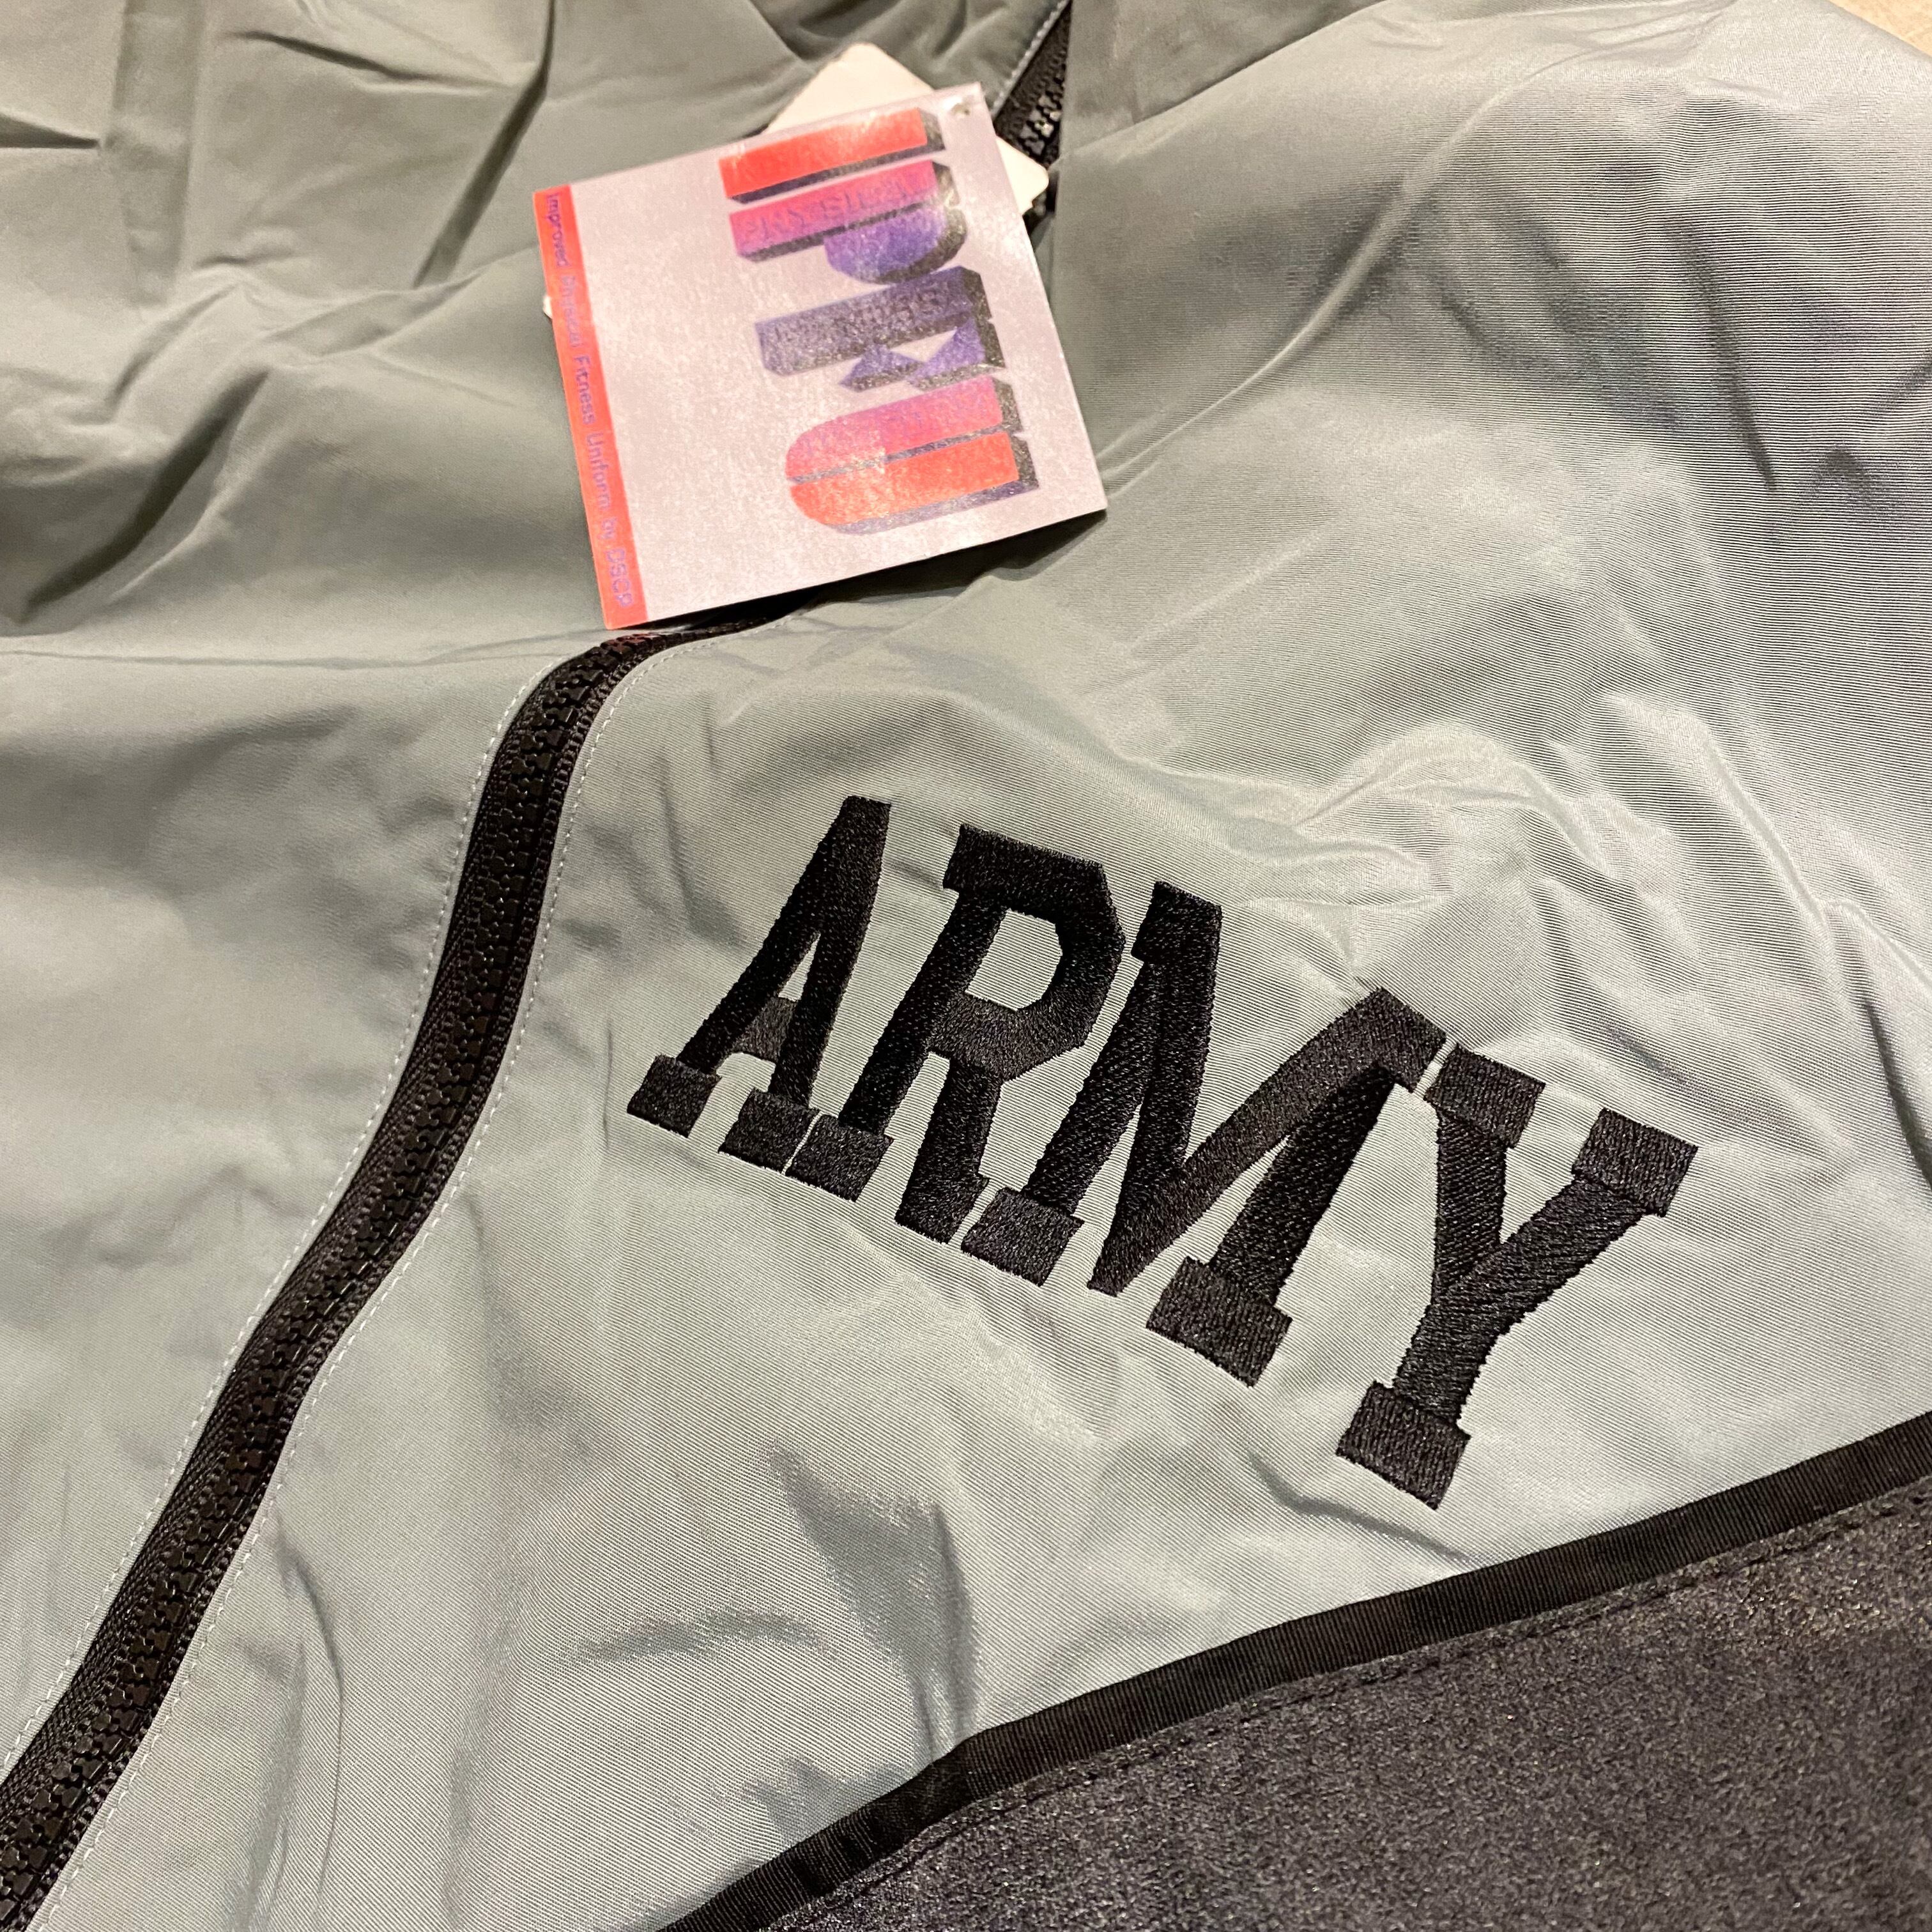 【U.S.ARMY】IPFU トレーニングジャケット XL デッドストック